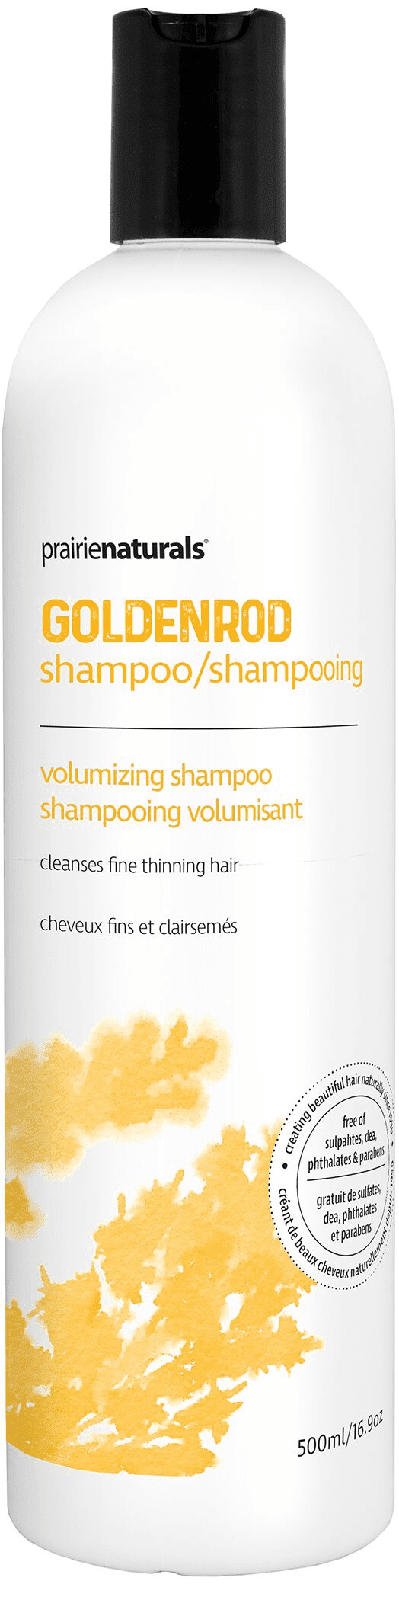 Prairie Naturals Goldenrod Volumizing Shampoo 500 mL Image 1